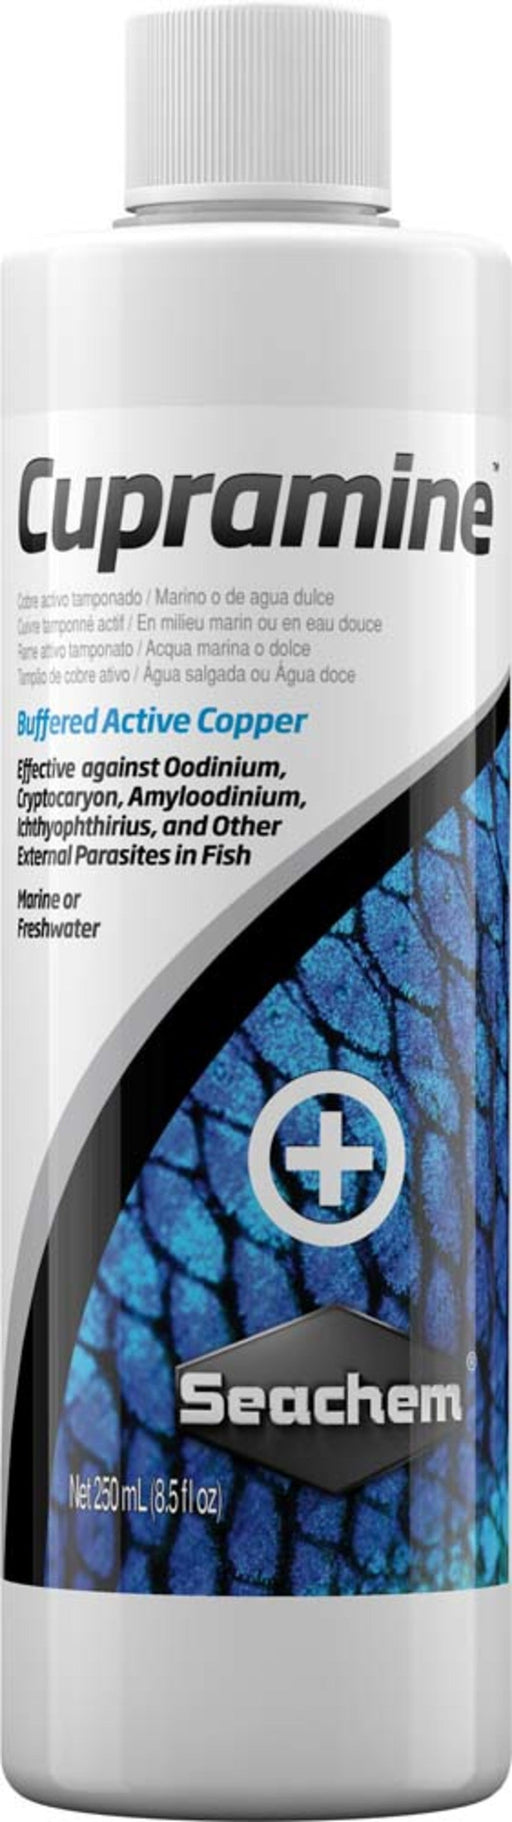 Seachem Laboratories Cupramine Copper Treatment